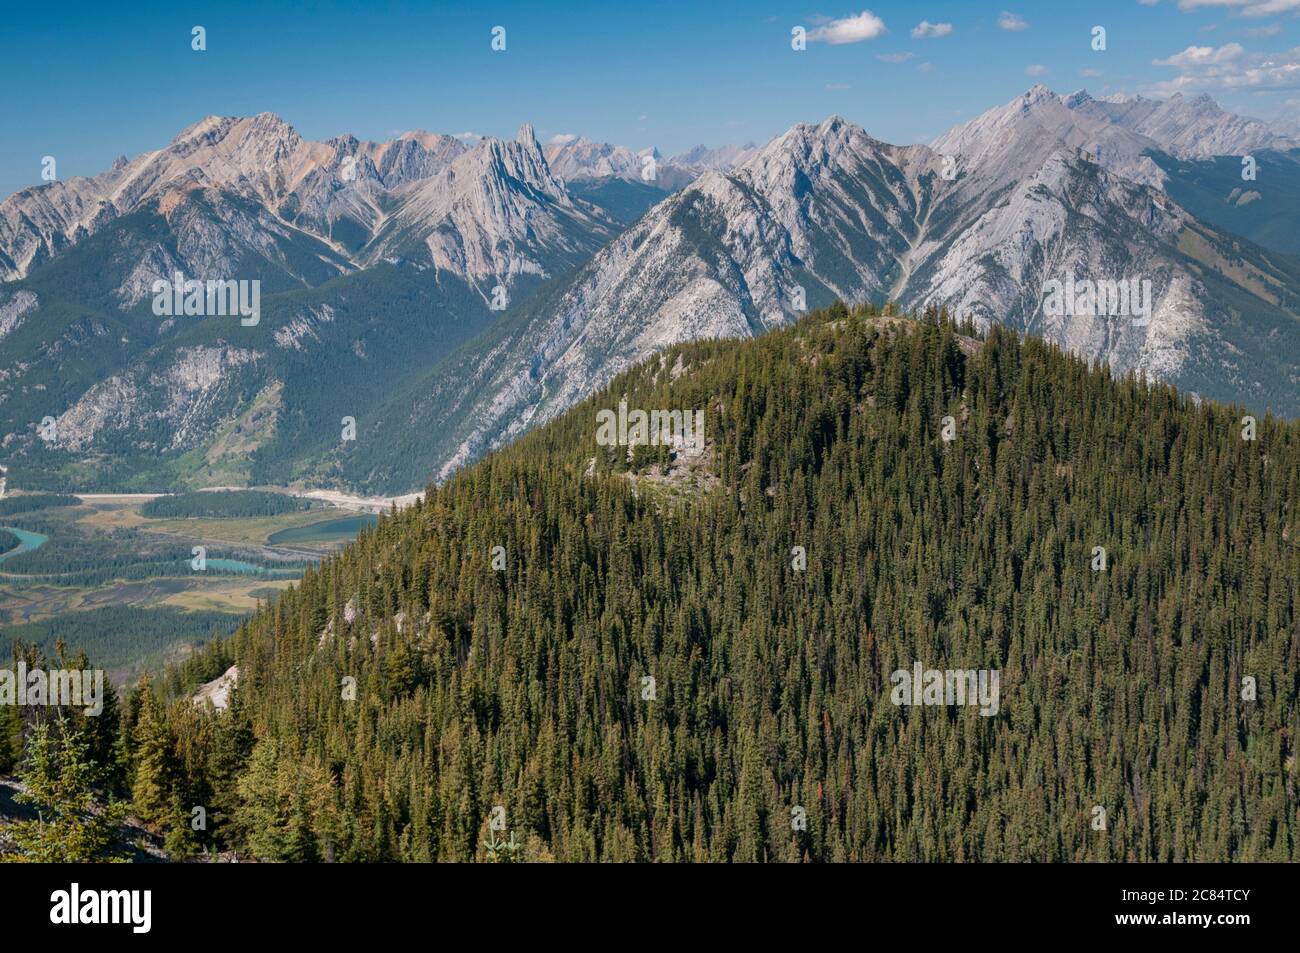 Mount Cory, Mount Edith, Mount Norquay und Sanson Peak vom Sulphur Mountain, Banff, Alberta, Kanada aus gesehen. Stockfoto